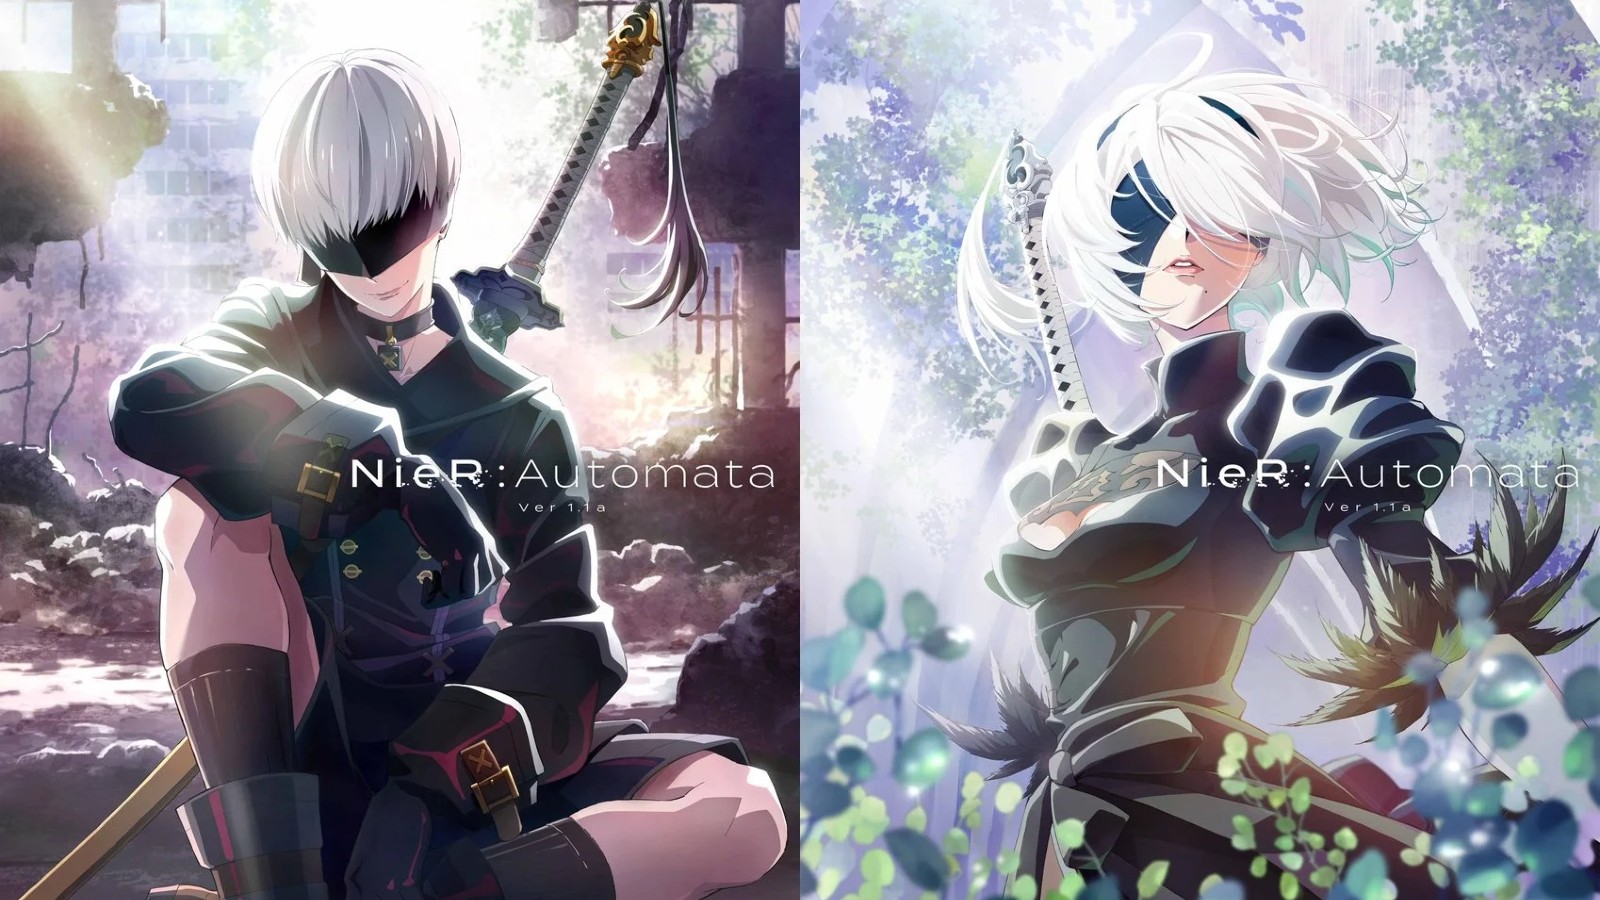 NieR Automata Anime Announced From Sword Art Online Studio